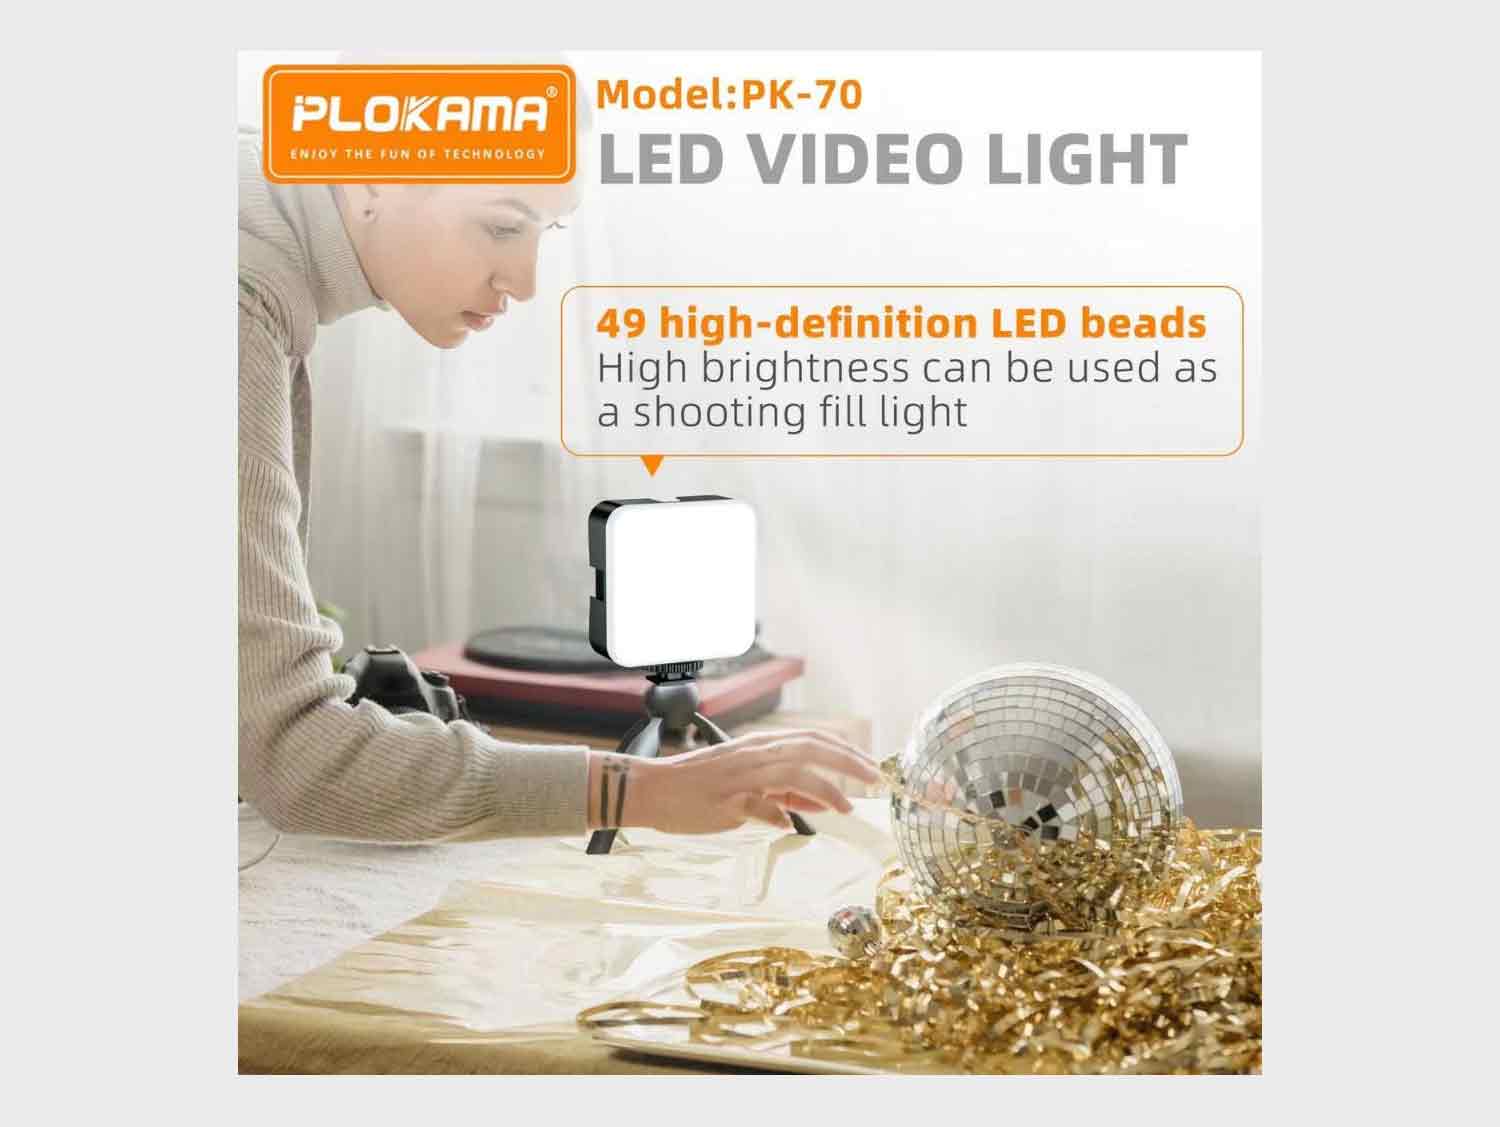 Plokama PK-70 LED Video Light showcasing high CRI for natural color reproduction